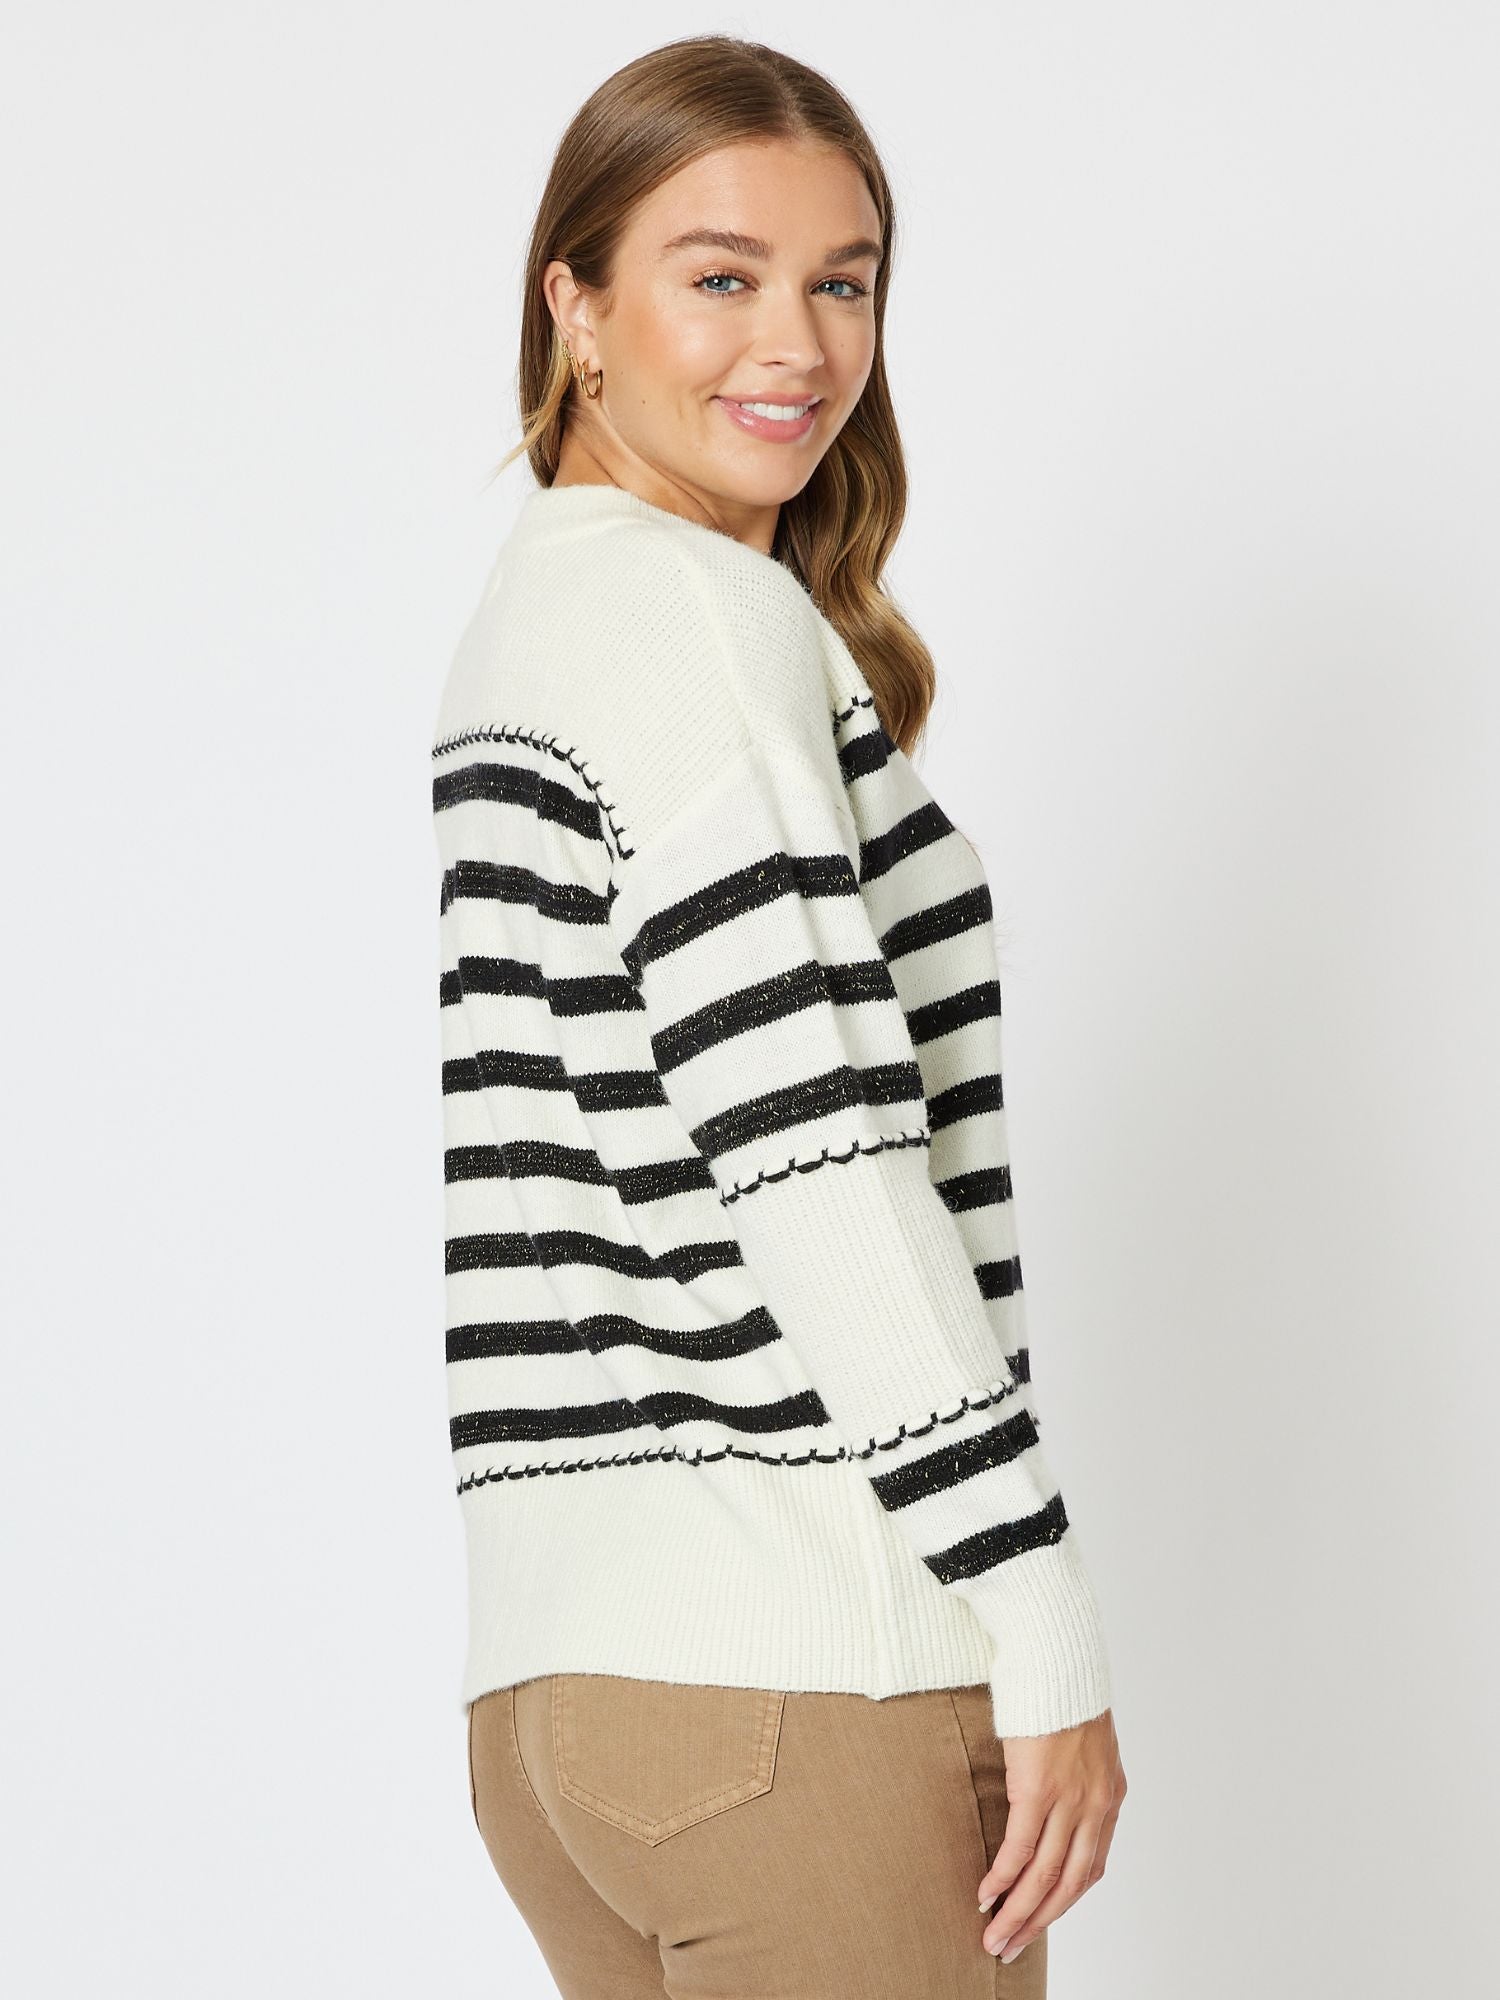 Stripe Detail Wool Blend Knit Top Top - Ivory